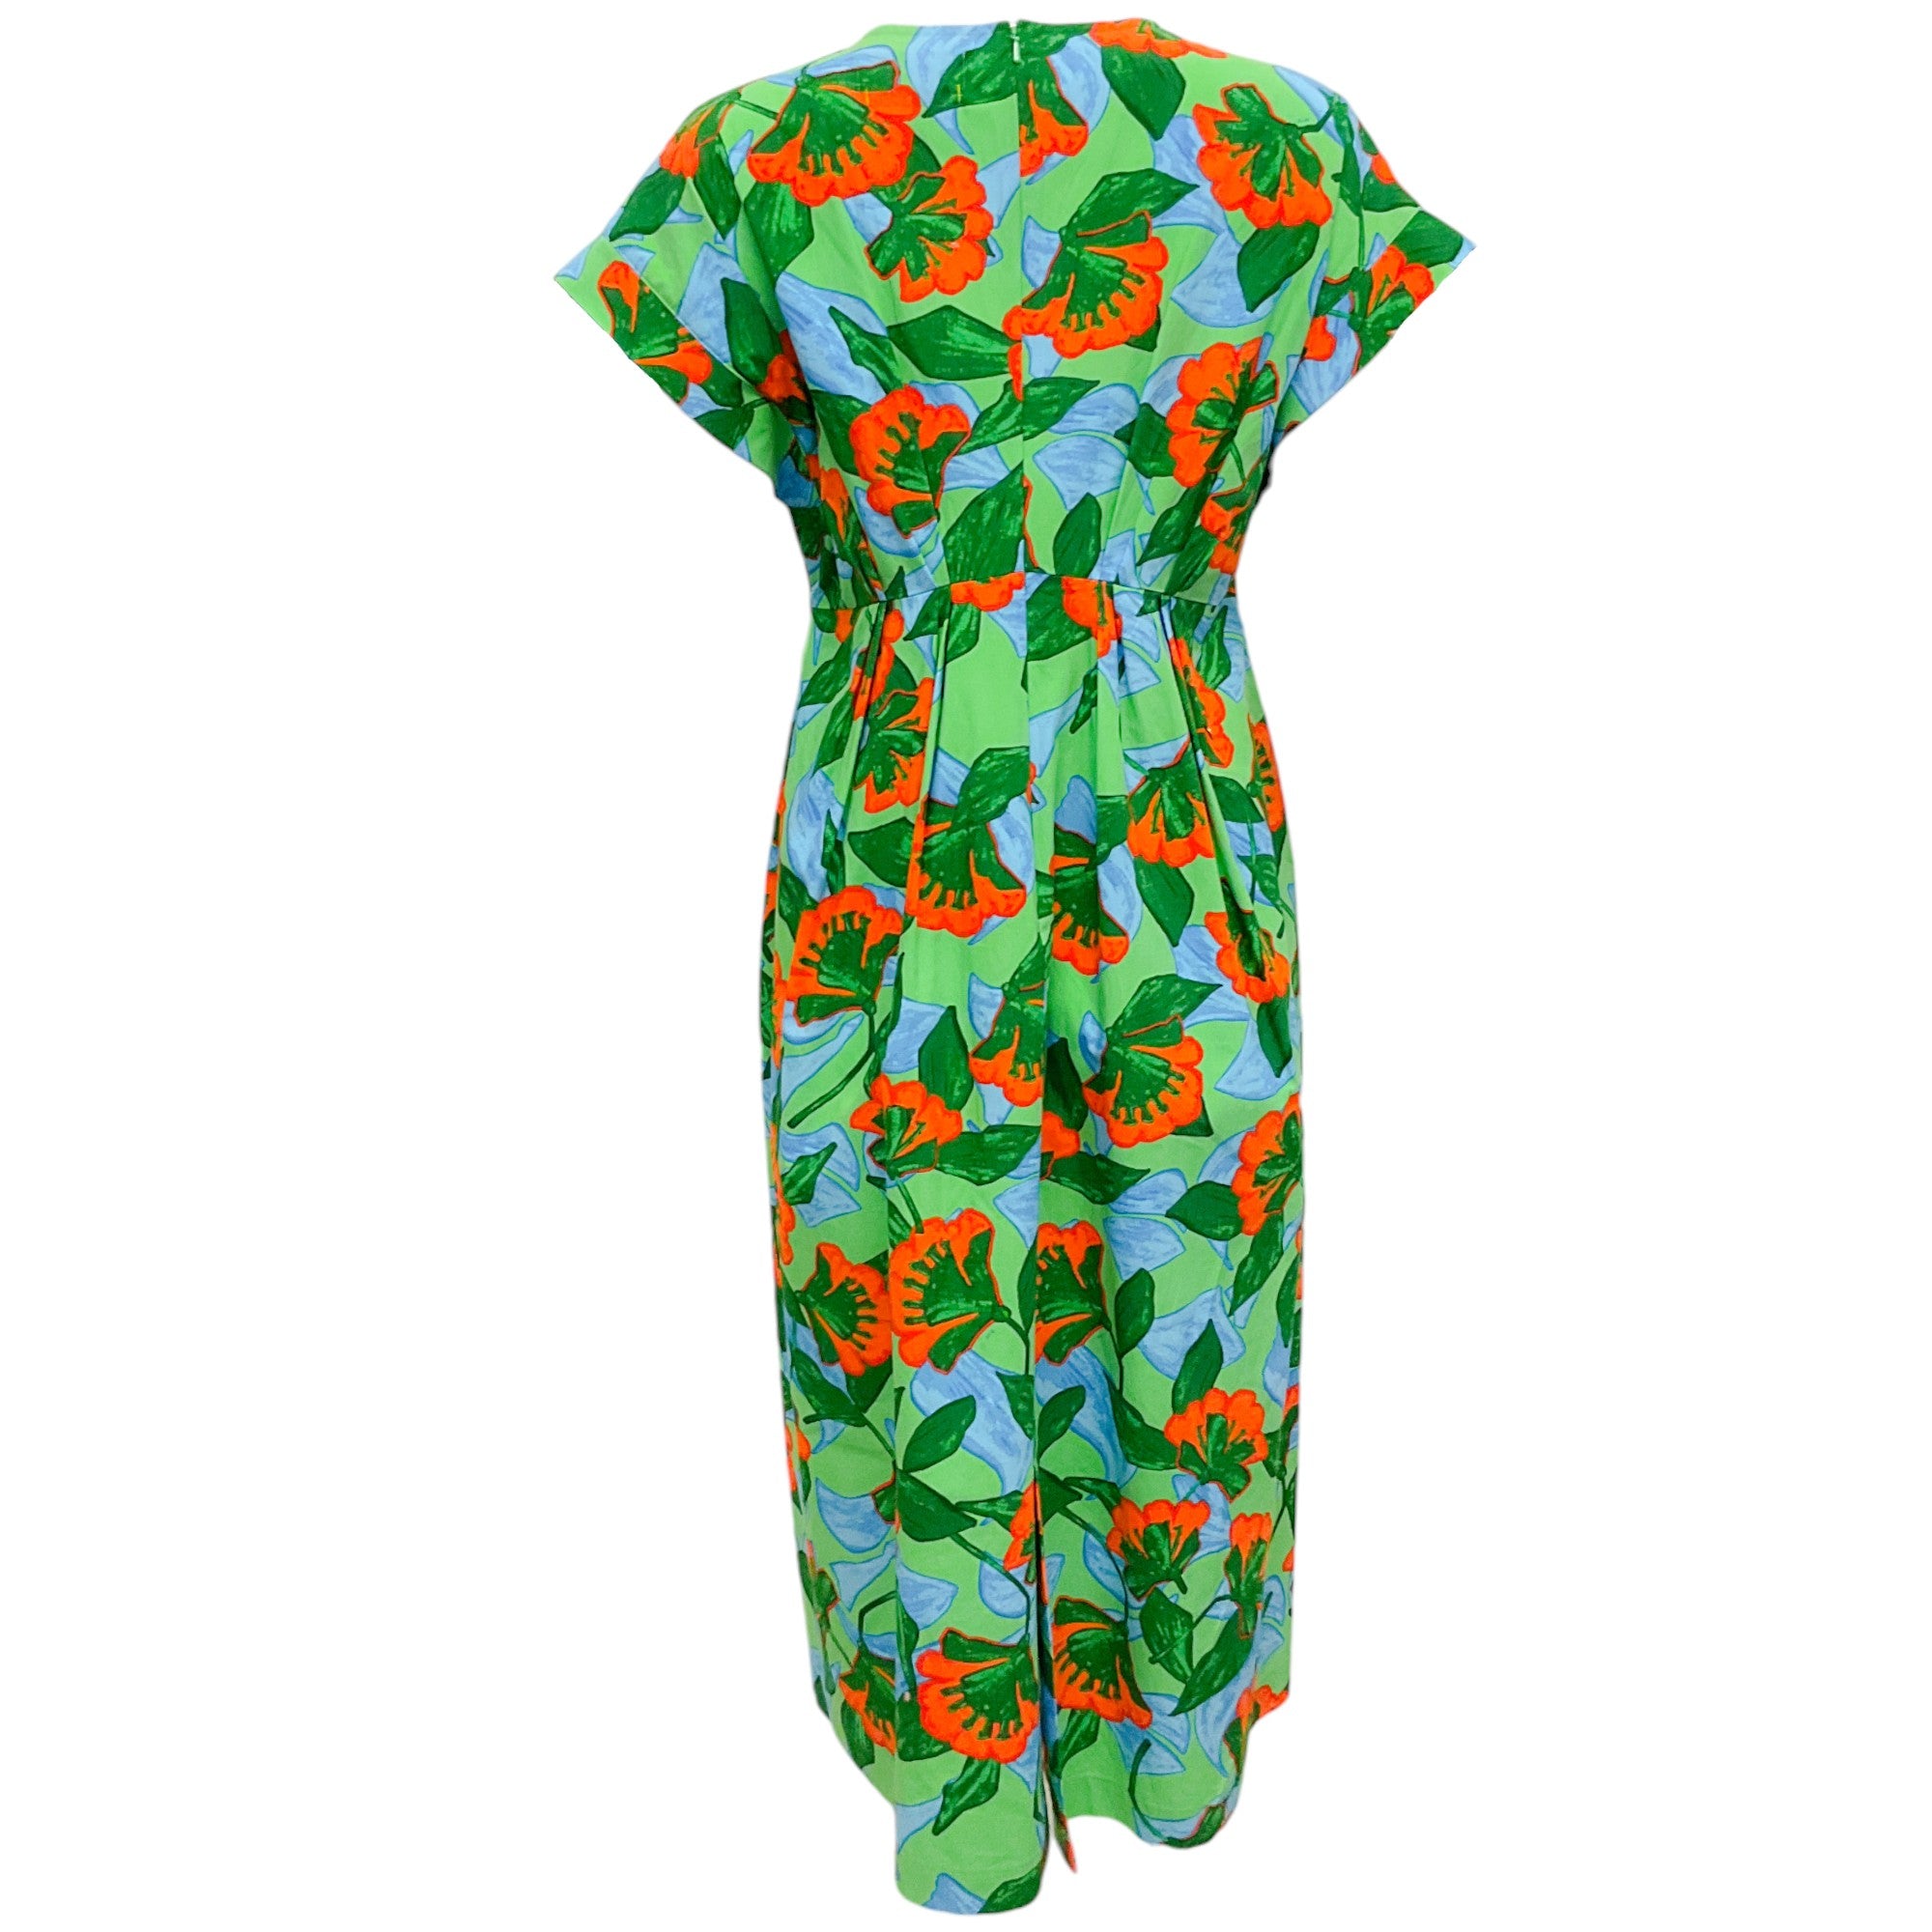 Muveil Green Multi Floral Cotton Dress